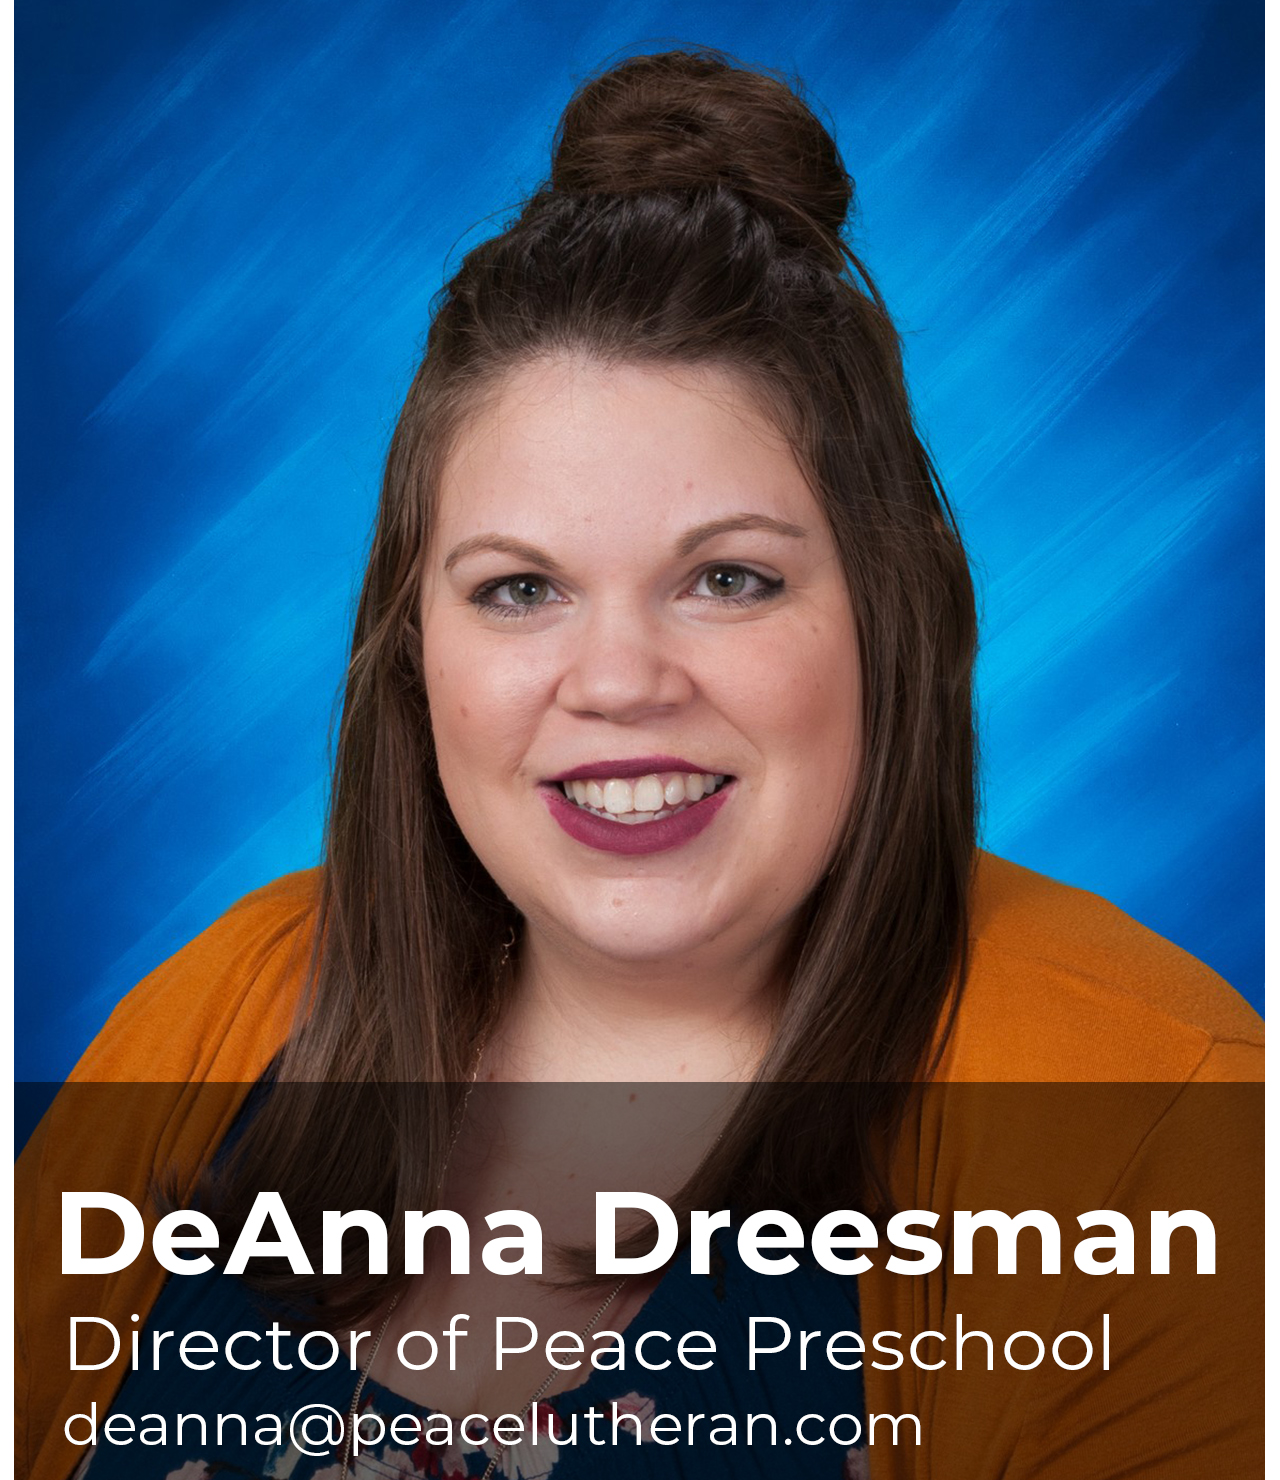 DeAnna Dreesman